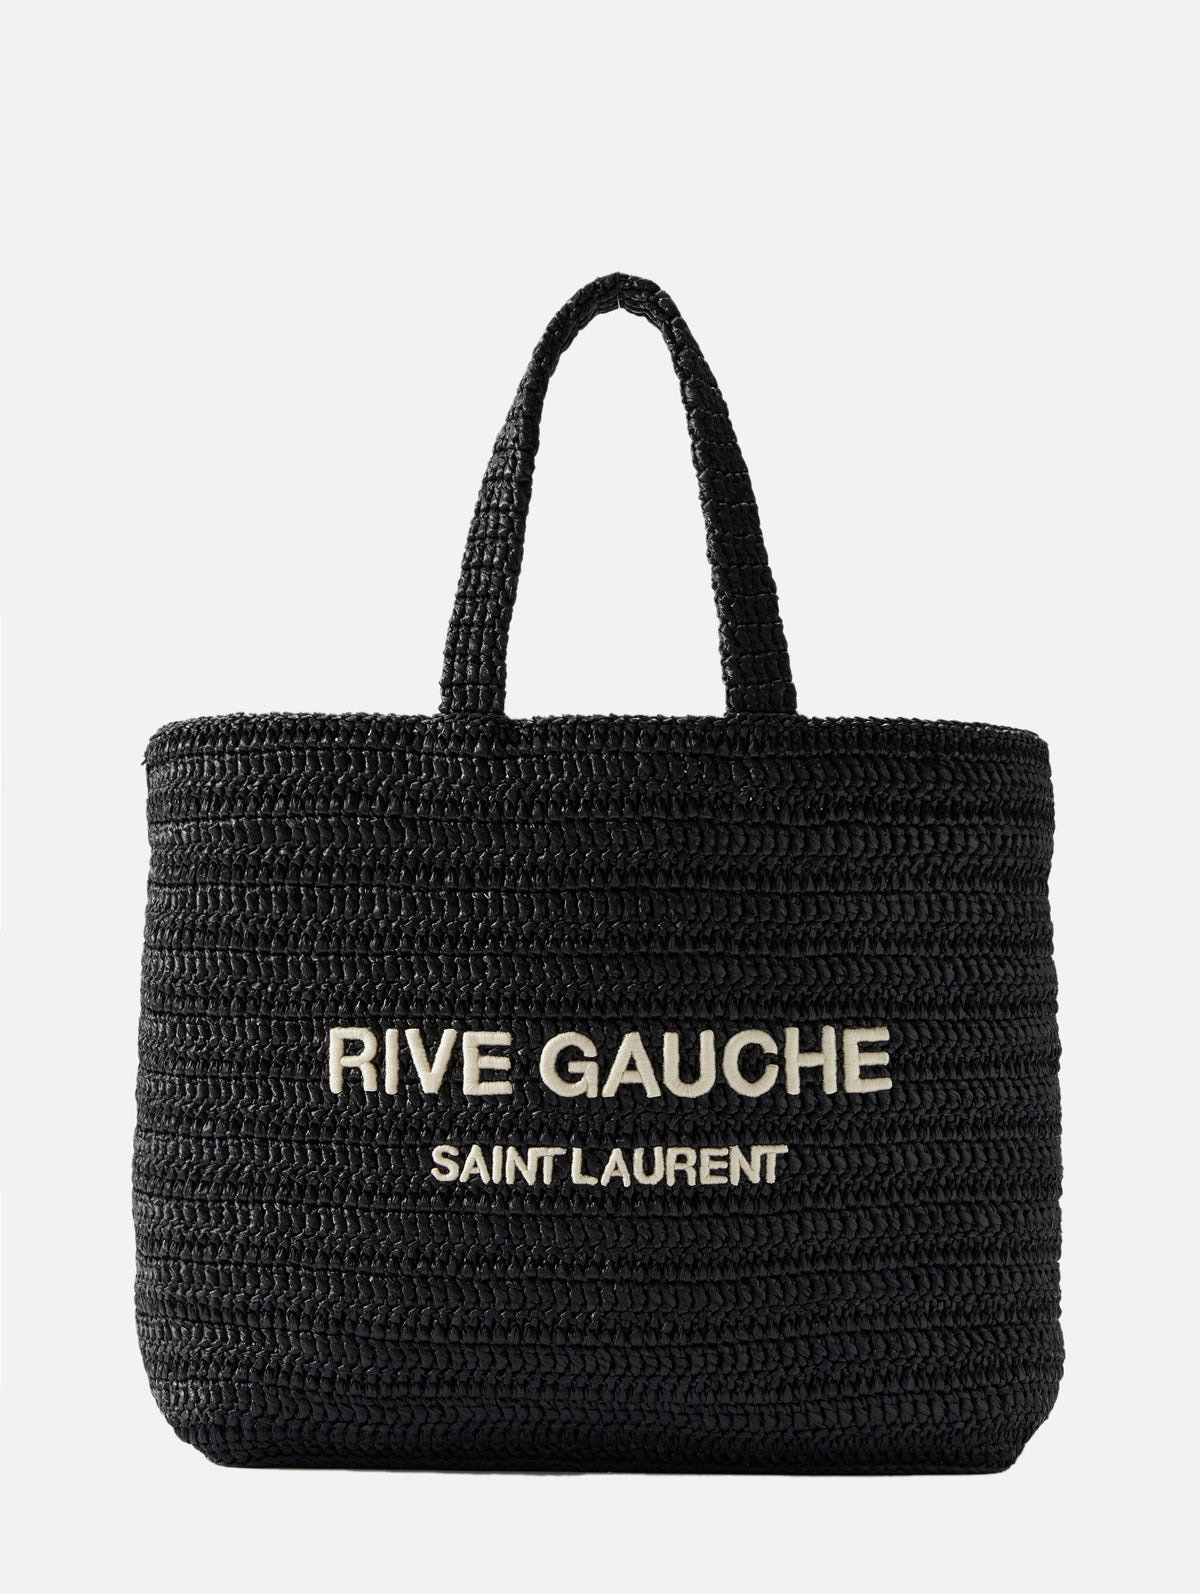 Saint Laurent Rive Gauche Large Raffia Tote Bag